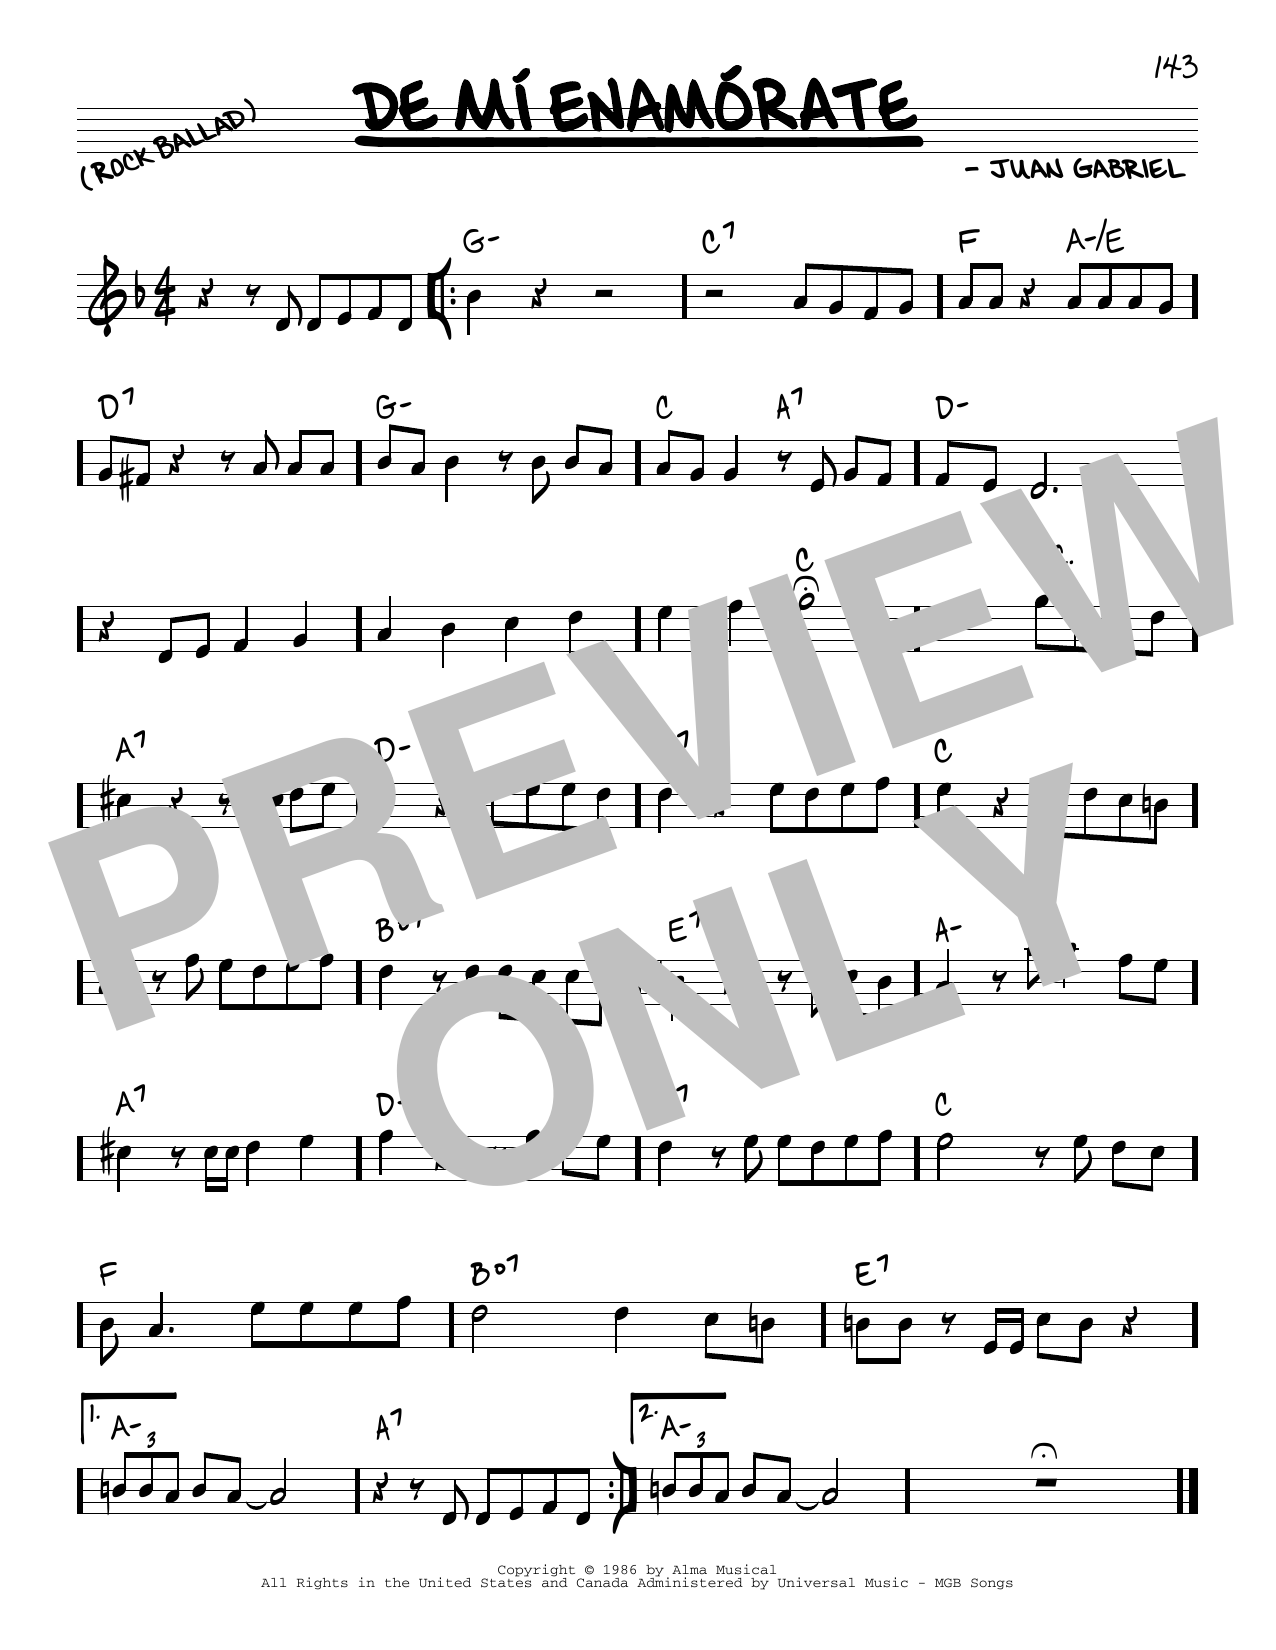 Juan Gabriel De Mi Enamorate Sheet Music Notes & Chords for Real Book – Melody & Chords - Download or Print PDF